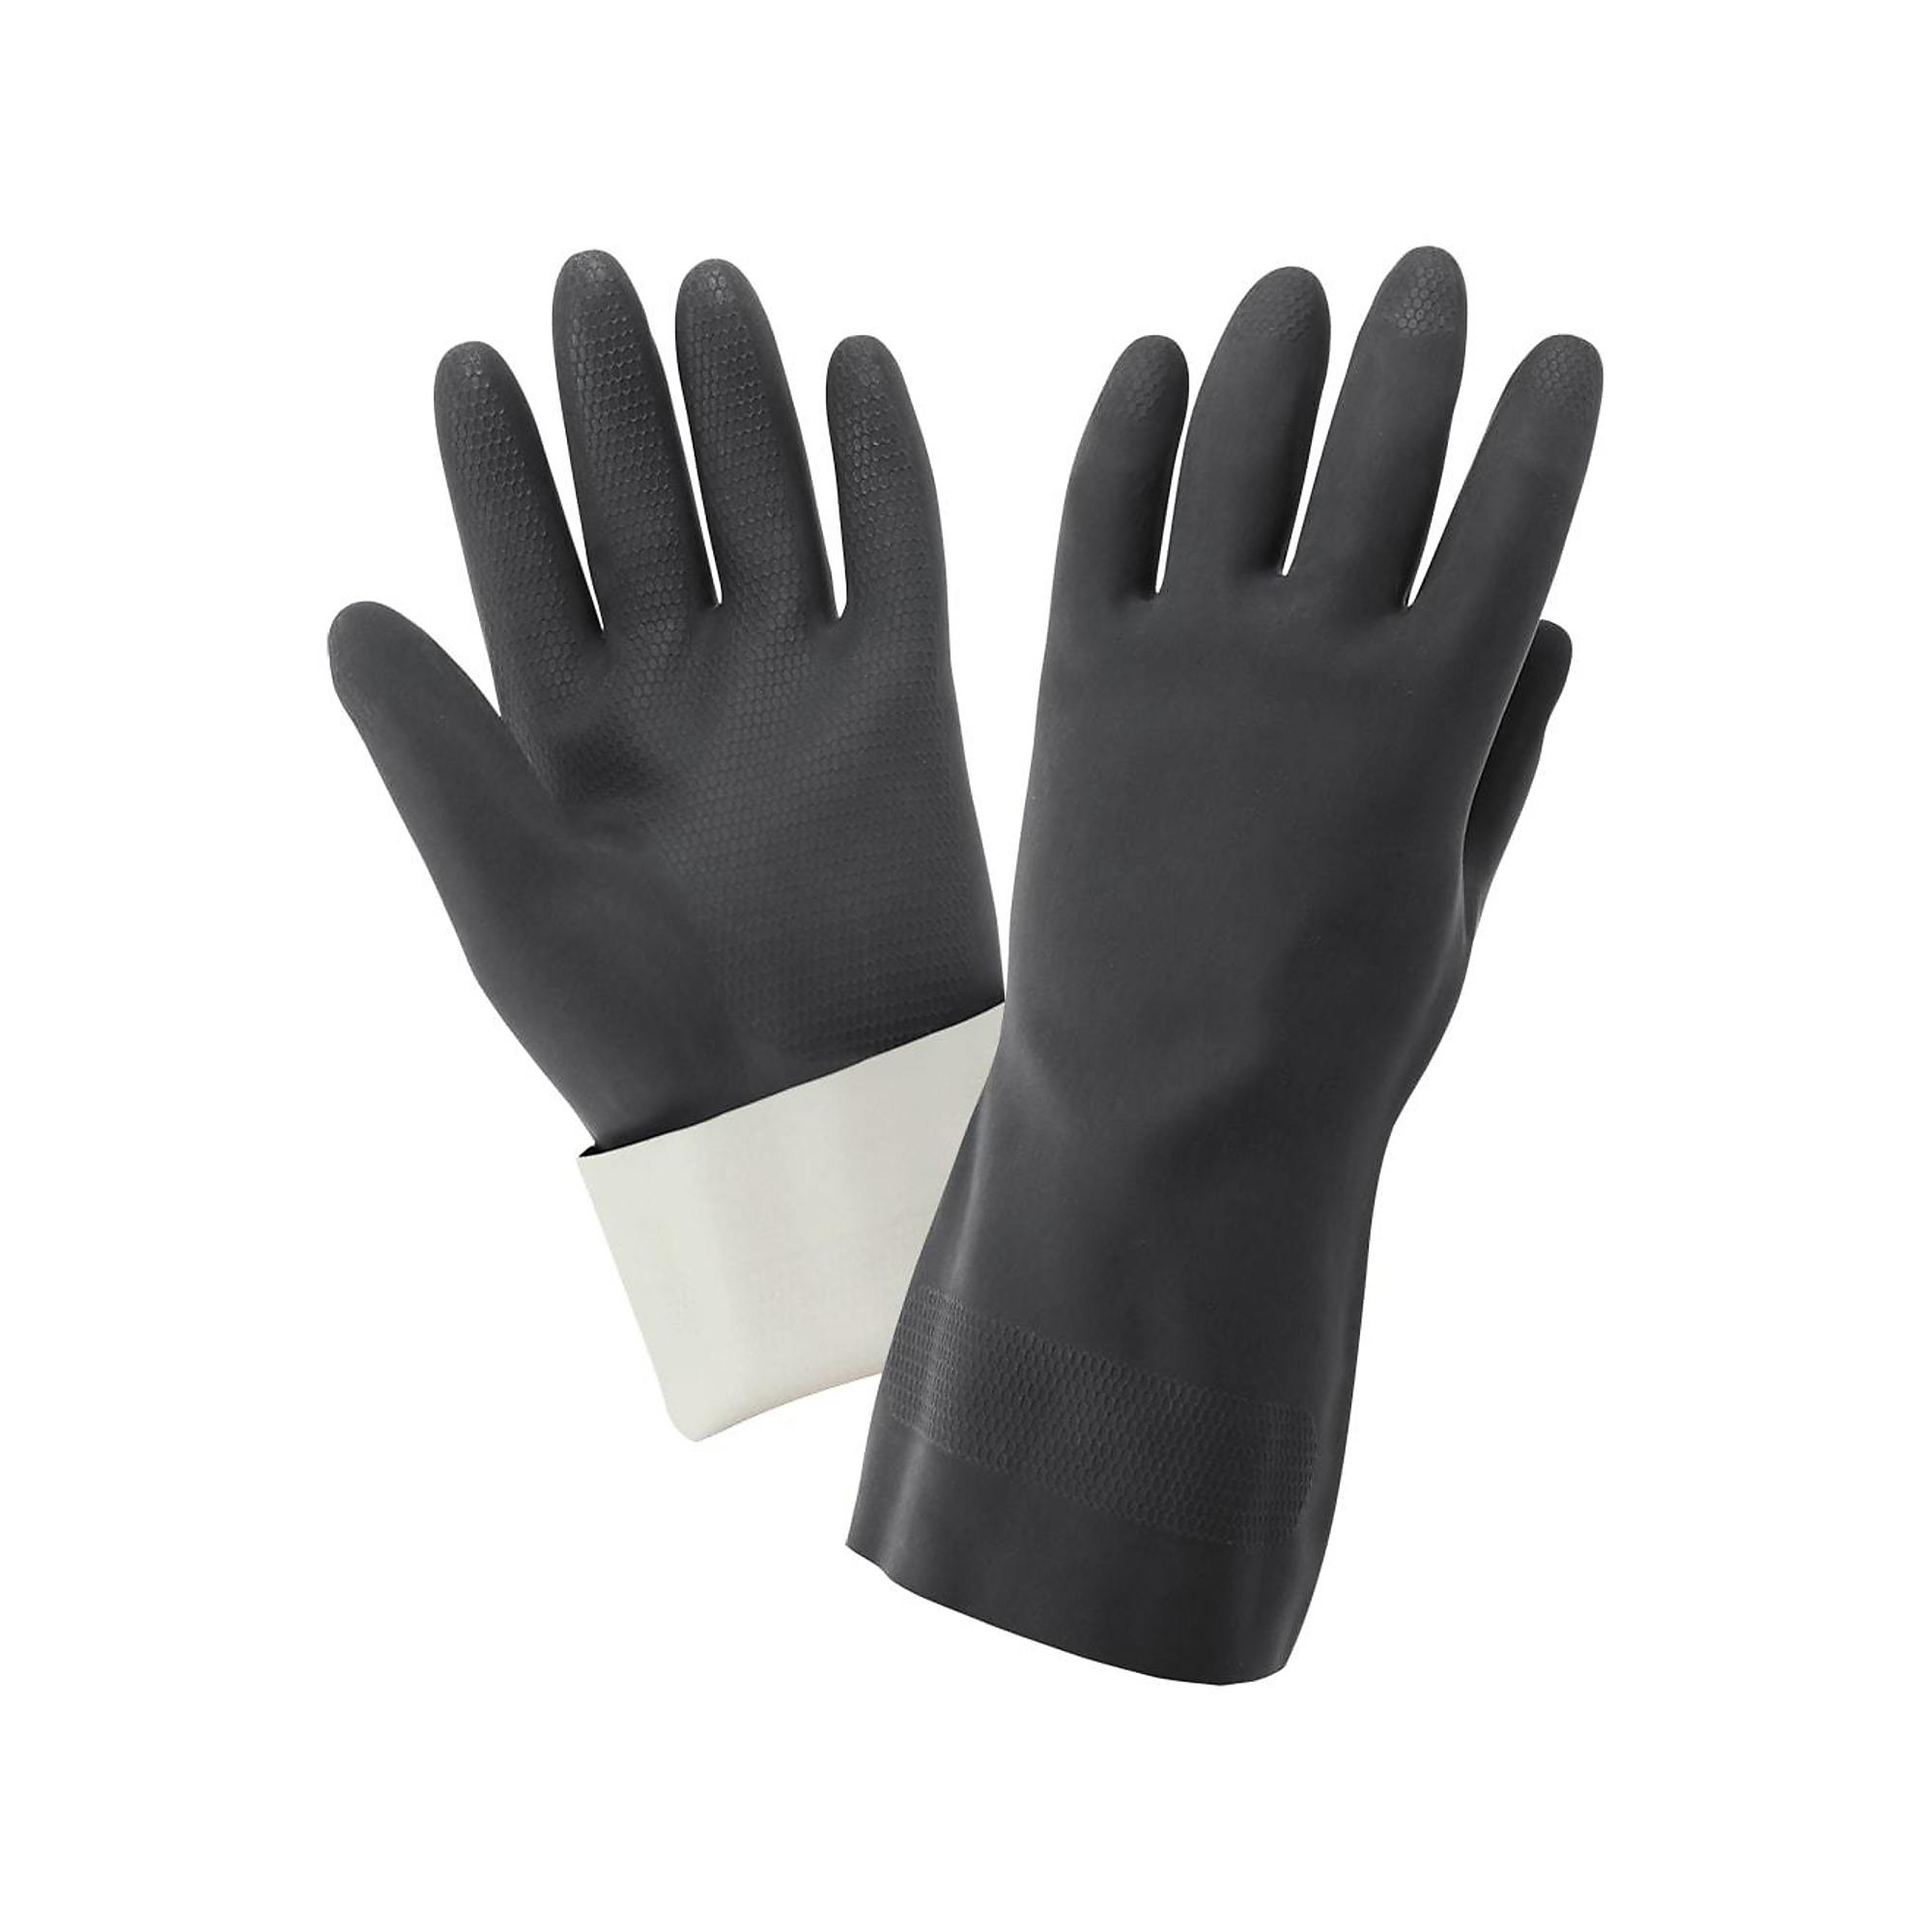 FrogWear, FrogWear Premium Flock 30-Mil Neoprene Gloves - 12 Pairs, Size 2XL, Color Black, Included (qty.) 12 Model 230F-11(2XL)